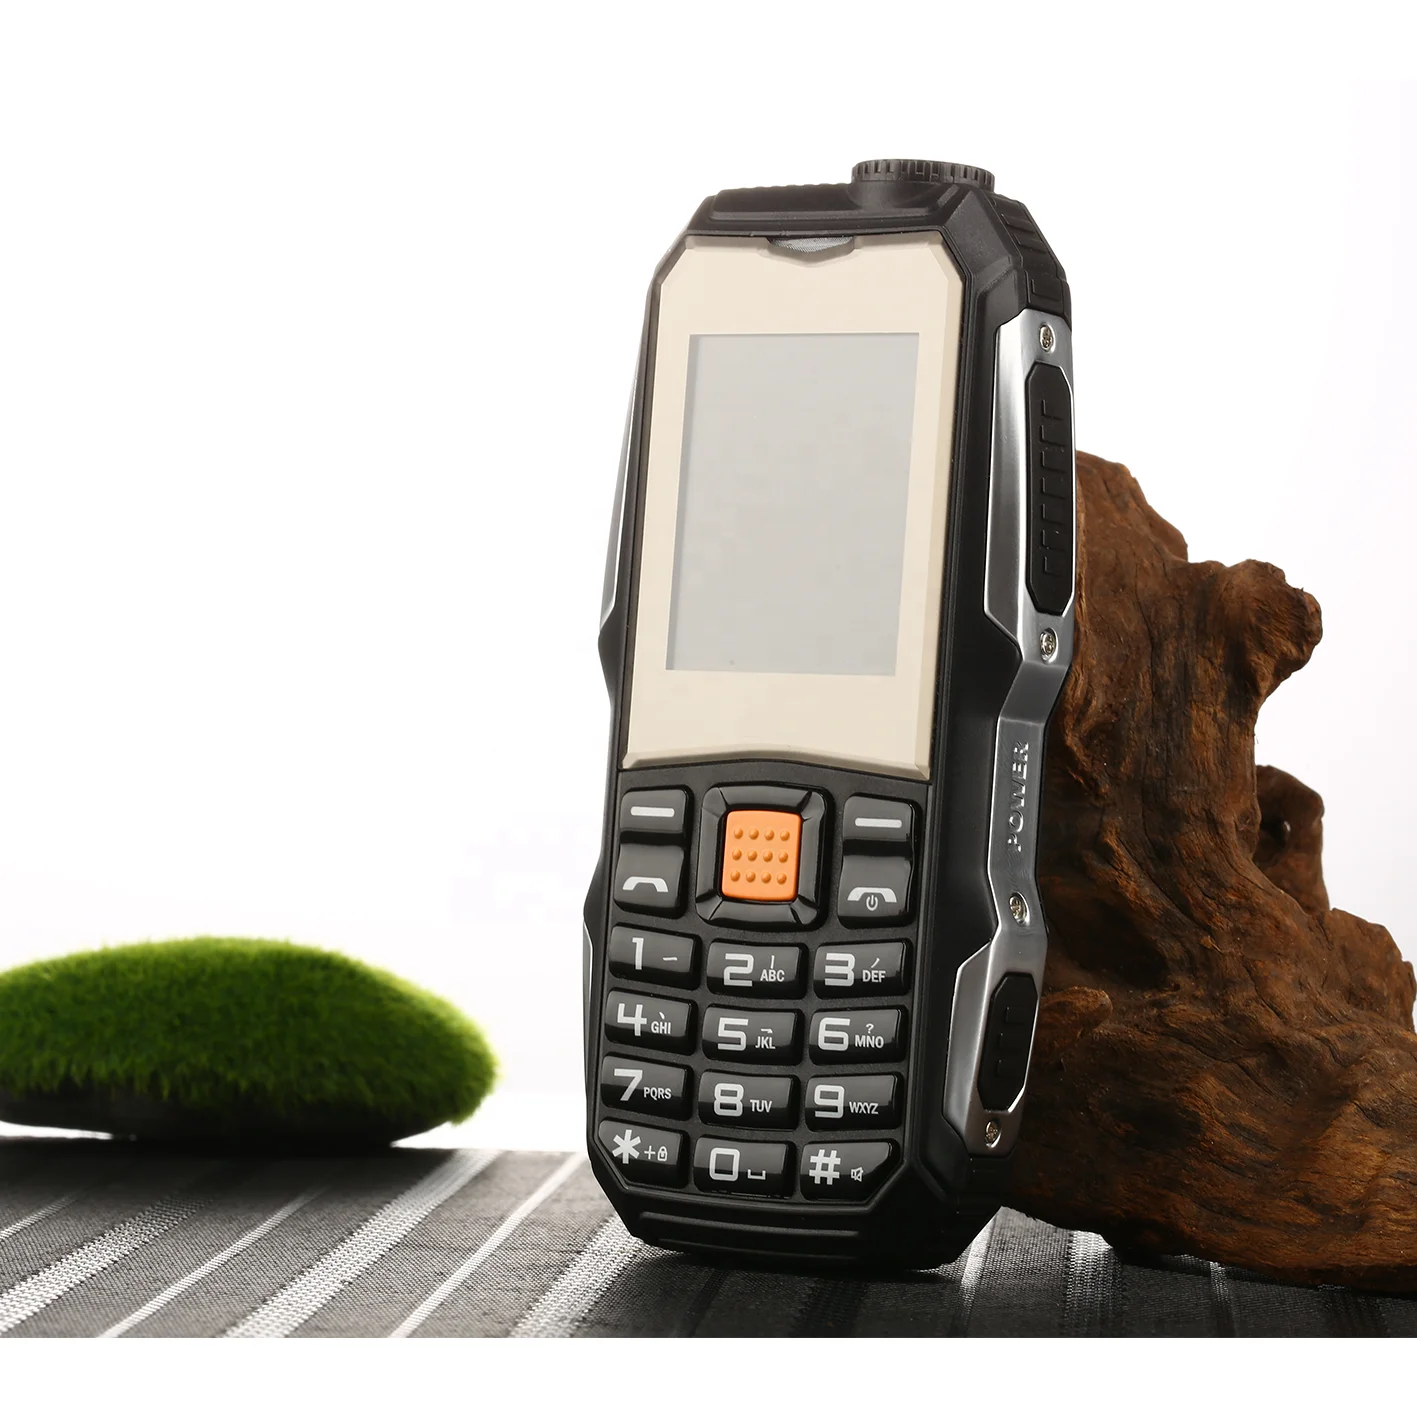 

2020 New arrival basic Factory Lowest Price Original Keypad Mobile Phone for L9, Orange, green, black